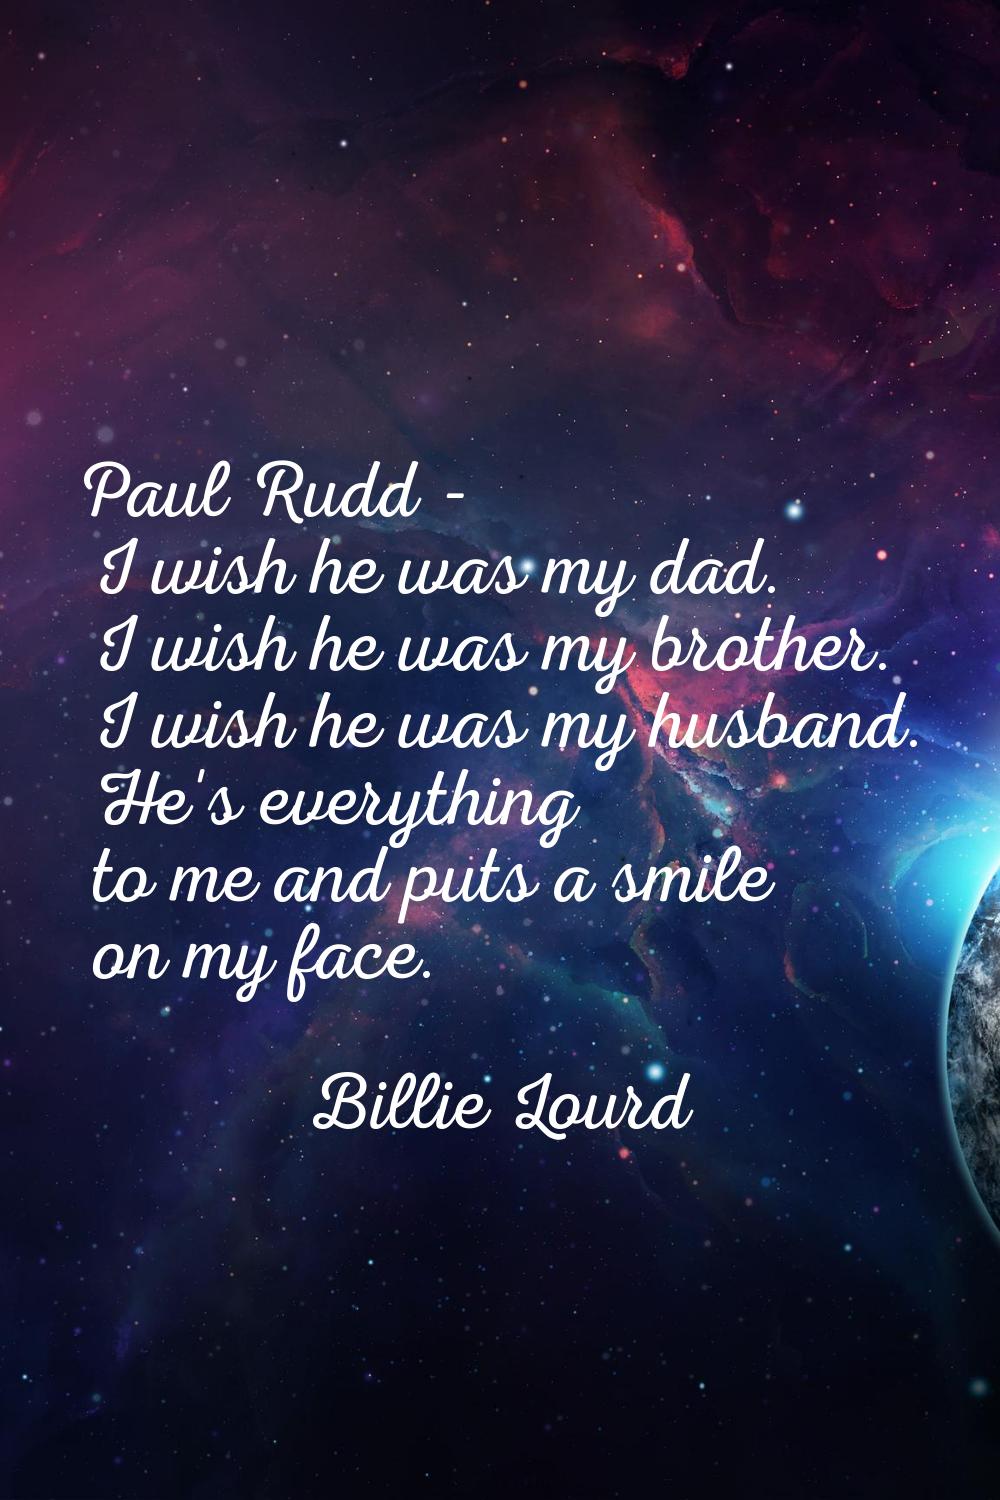 Paul Rudd - I wish he was my dad. I wish he was my brother. I wish he was my husband. He's everythi